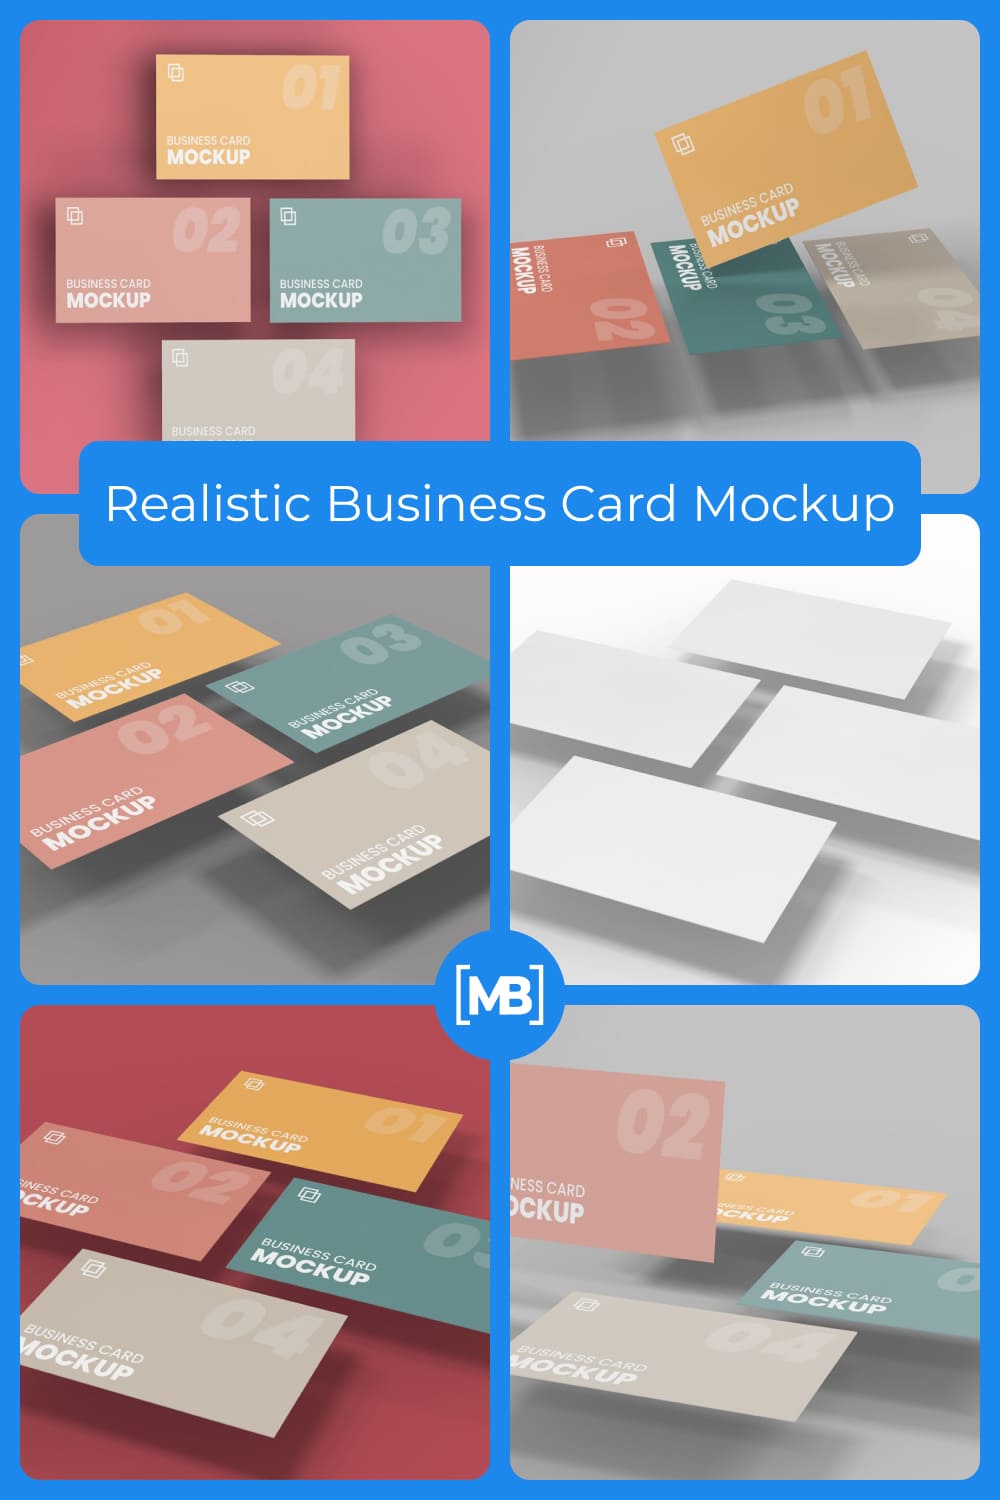 Laconic multi-colored cards.